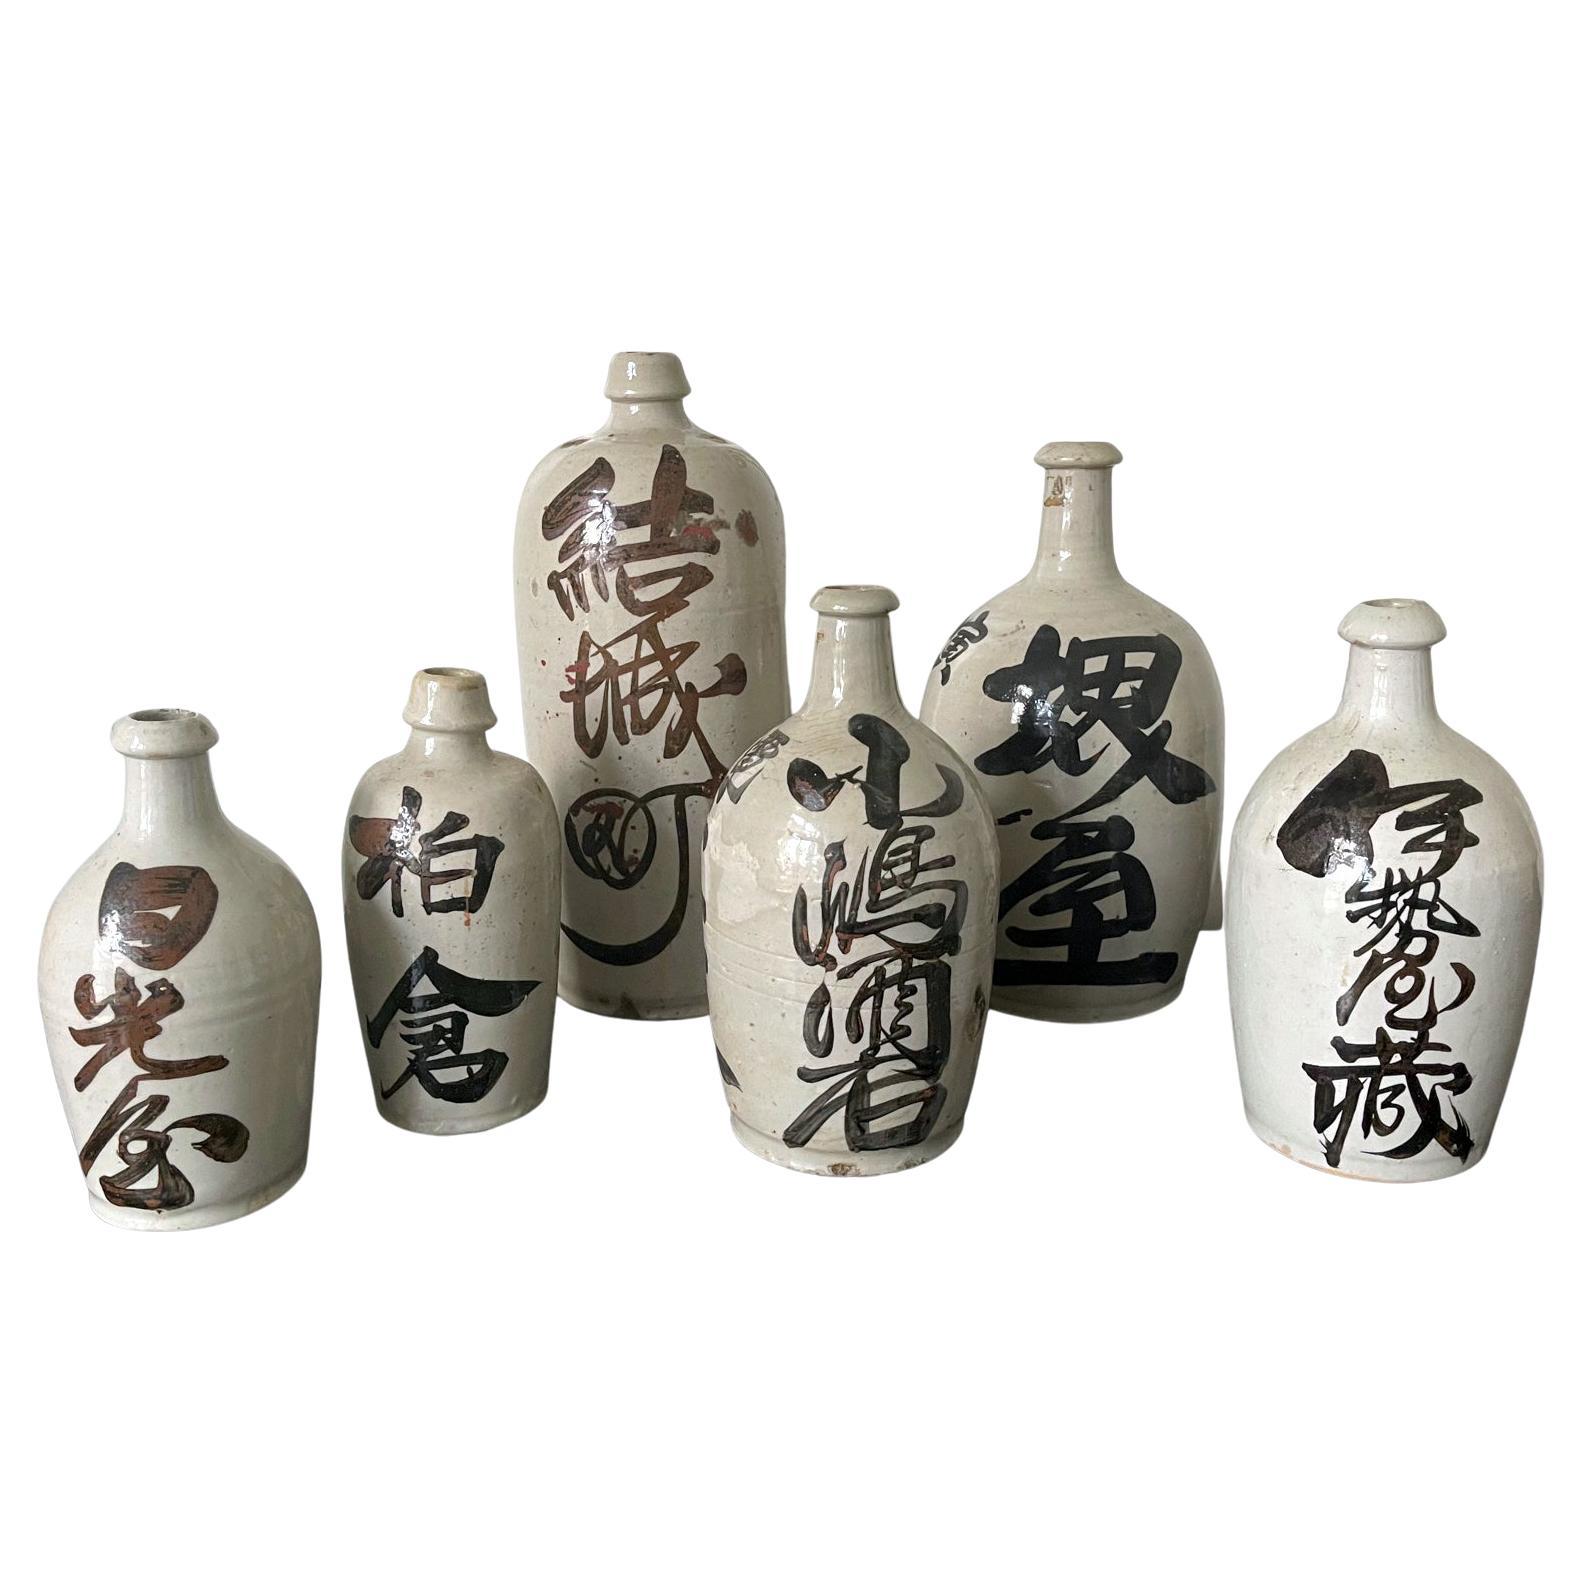 Collection of Six Vintage Japanese Ceramic Sake Bottle